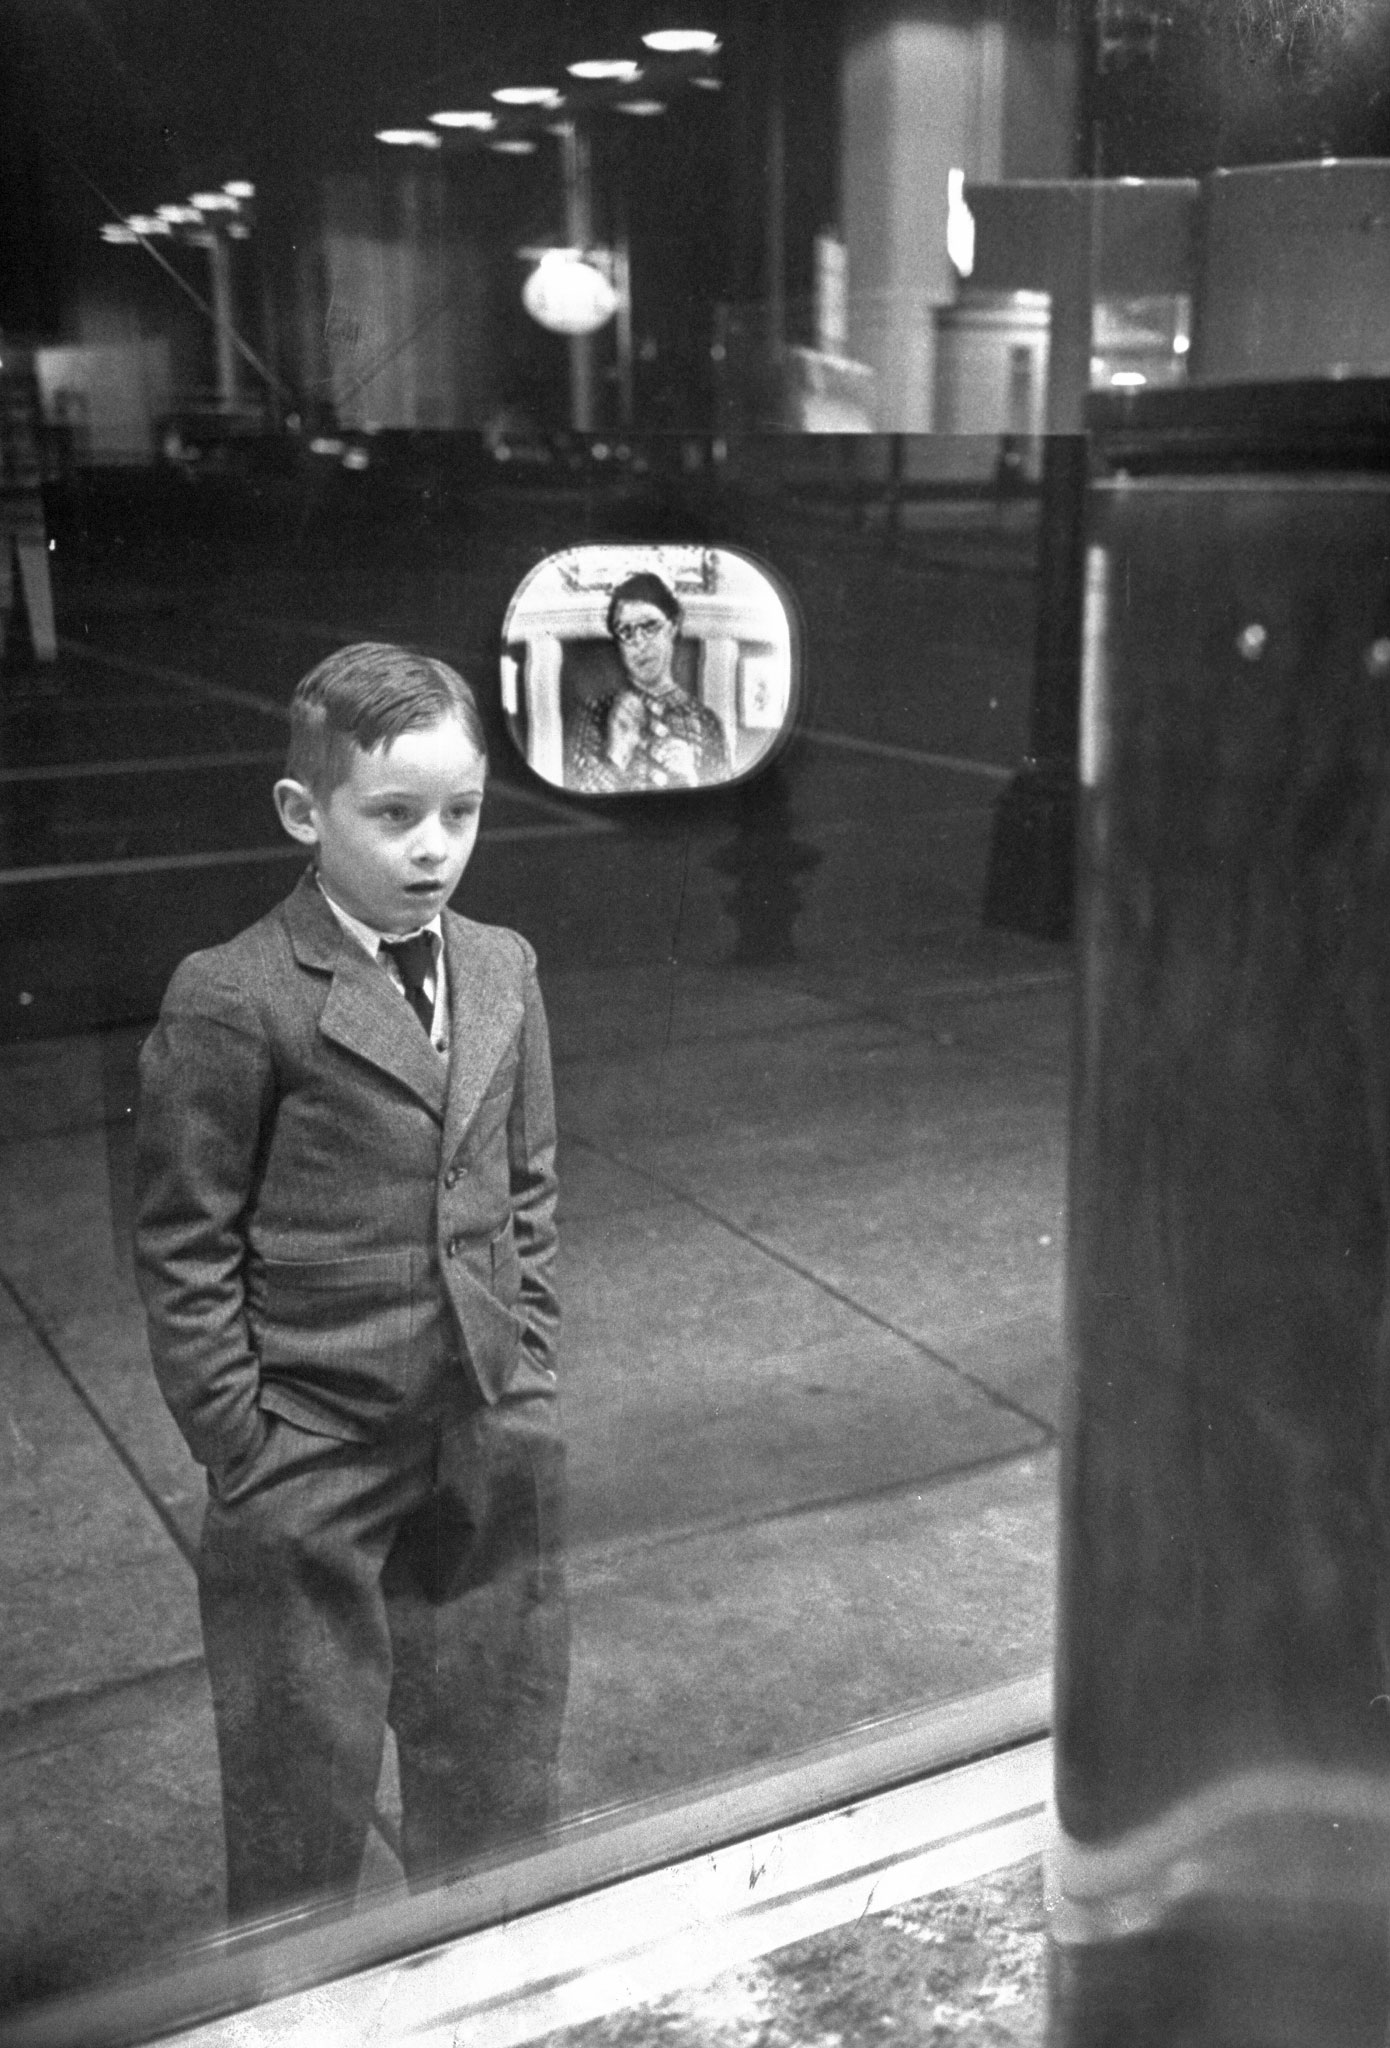 A boy watches TV in an appliance store window in 1948.